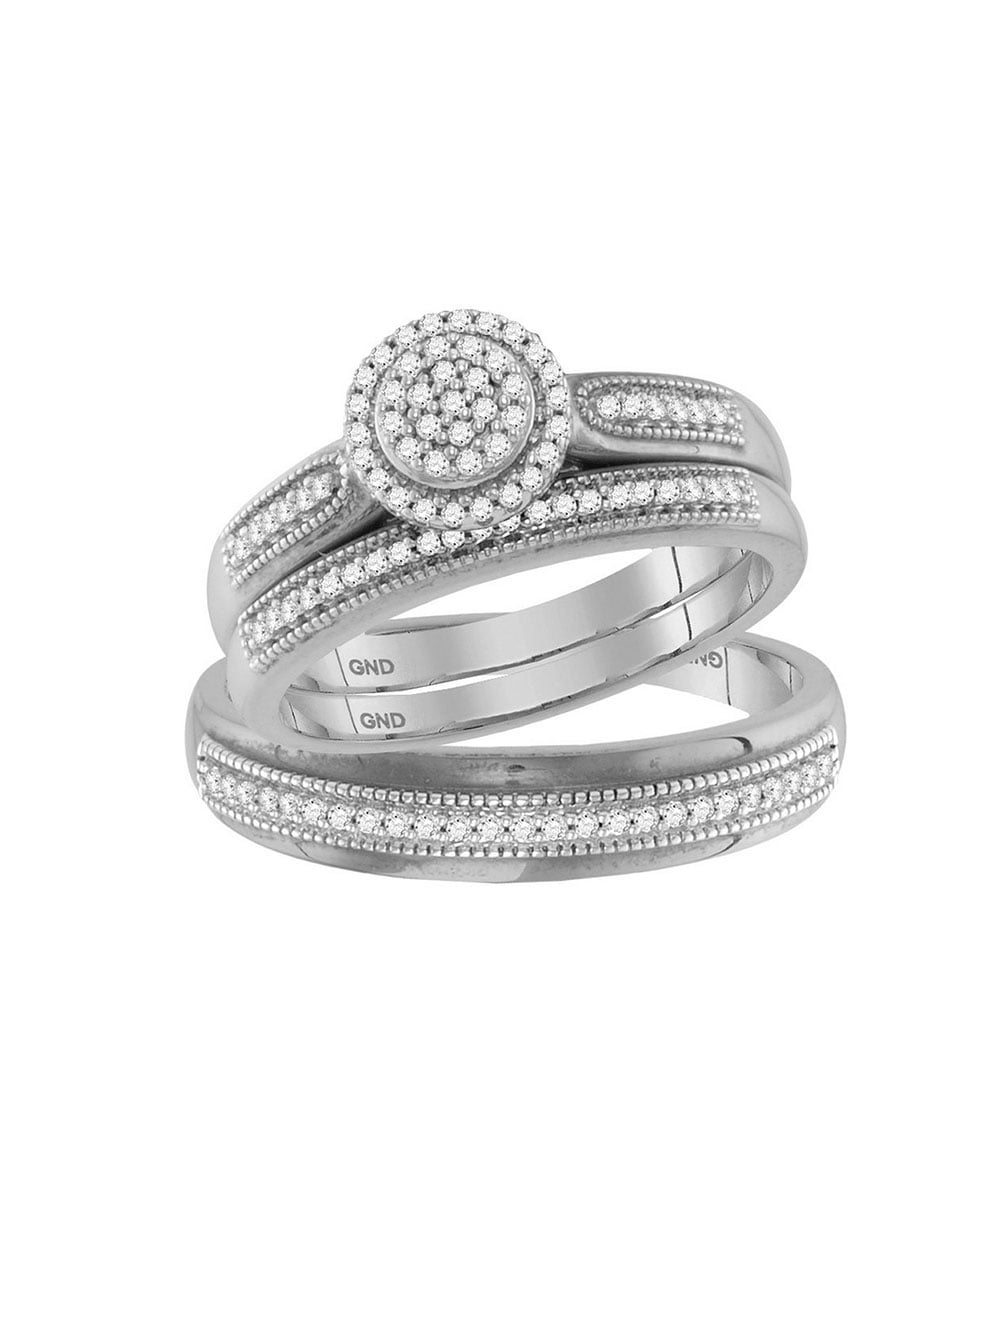 Details about   Round Pave Diamond Bridal Engagement Ladies Wedding Ring 14K White Gold Finish 